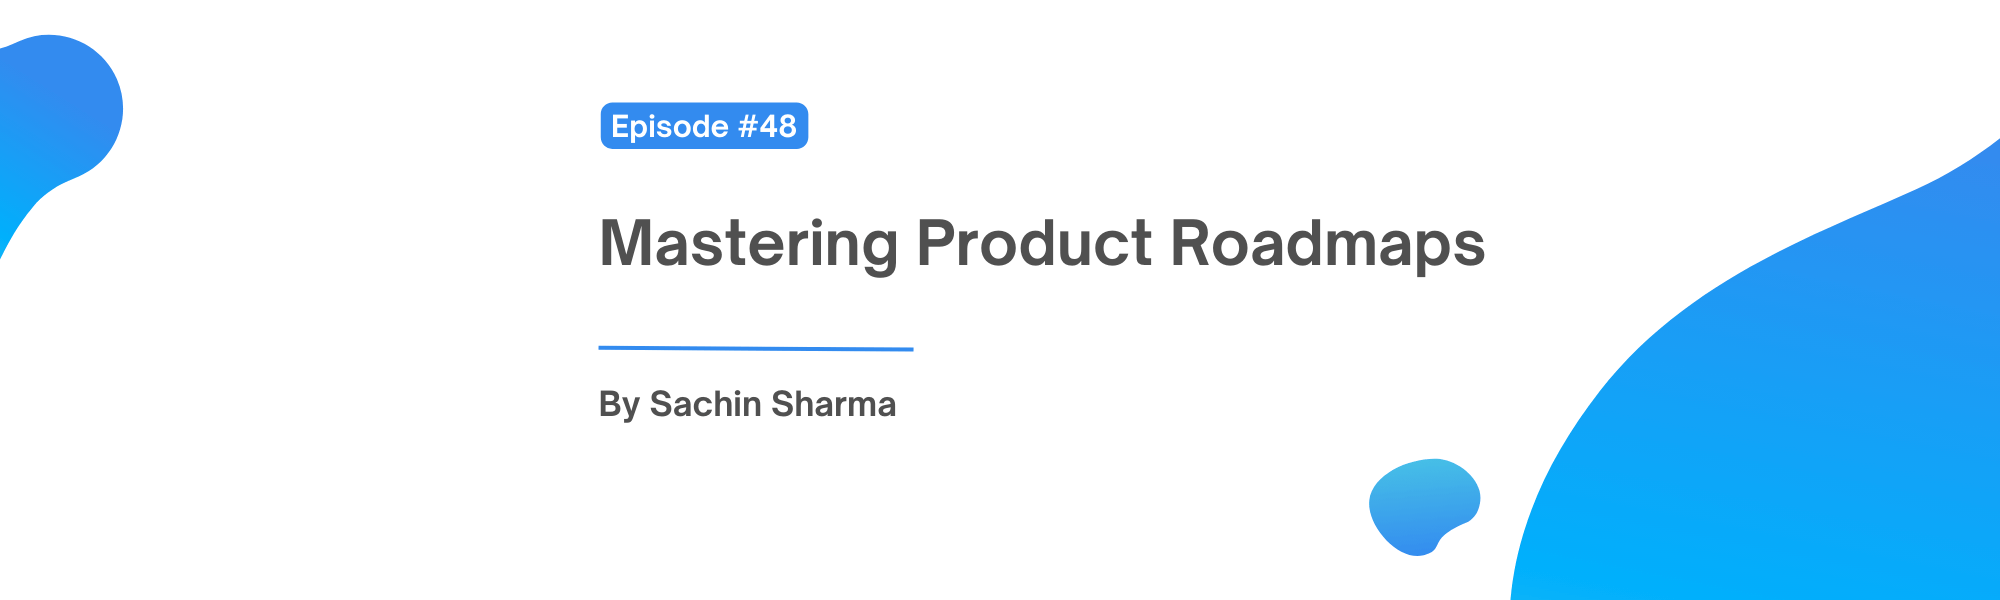 Mastering Product Roadmaps